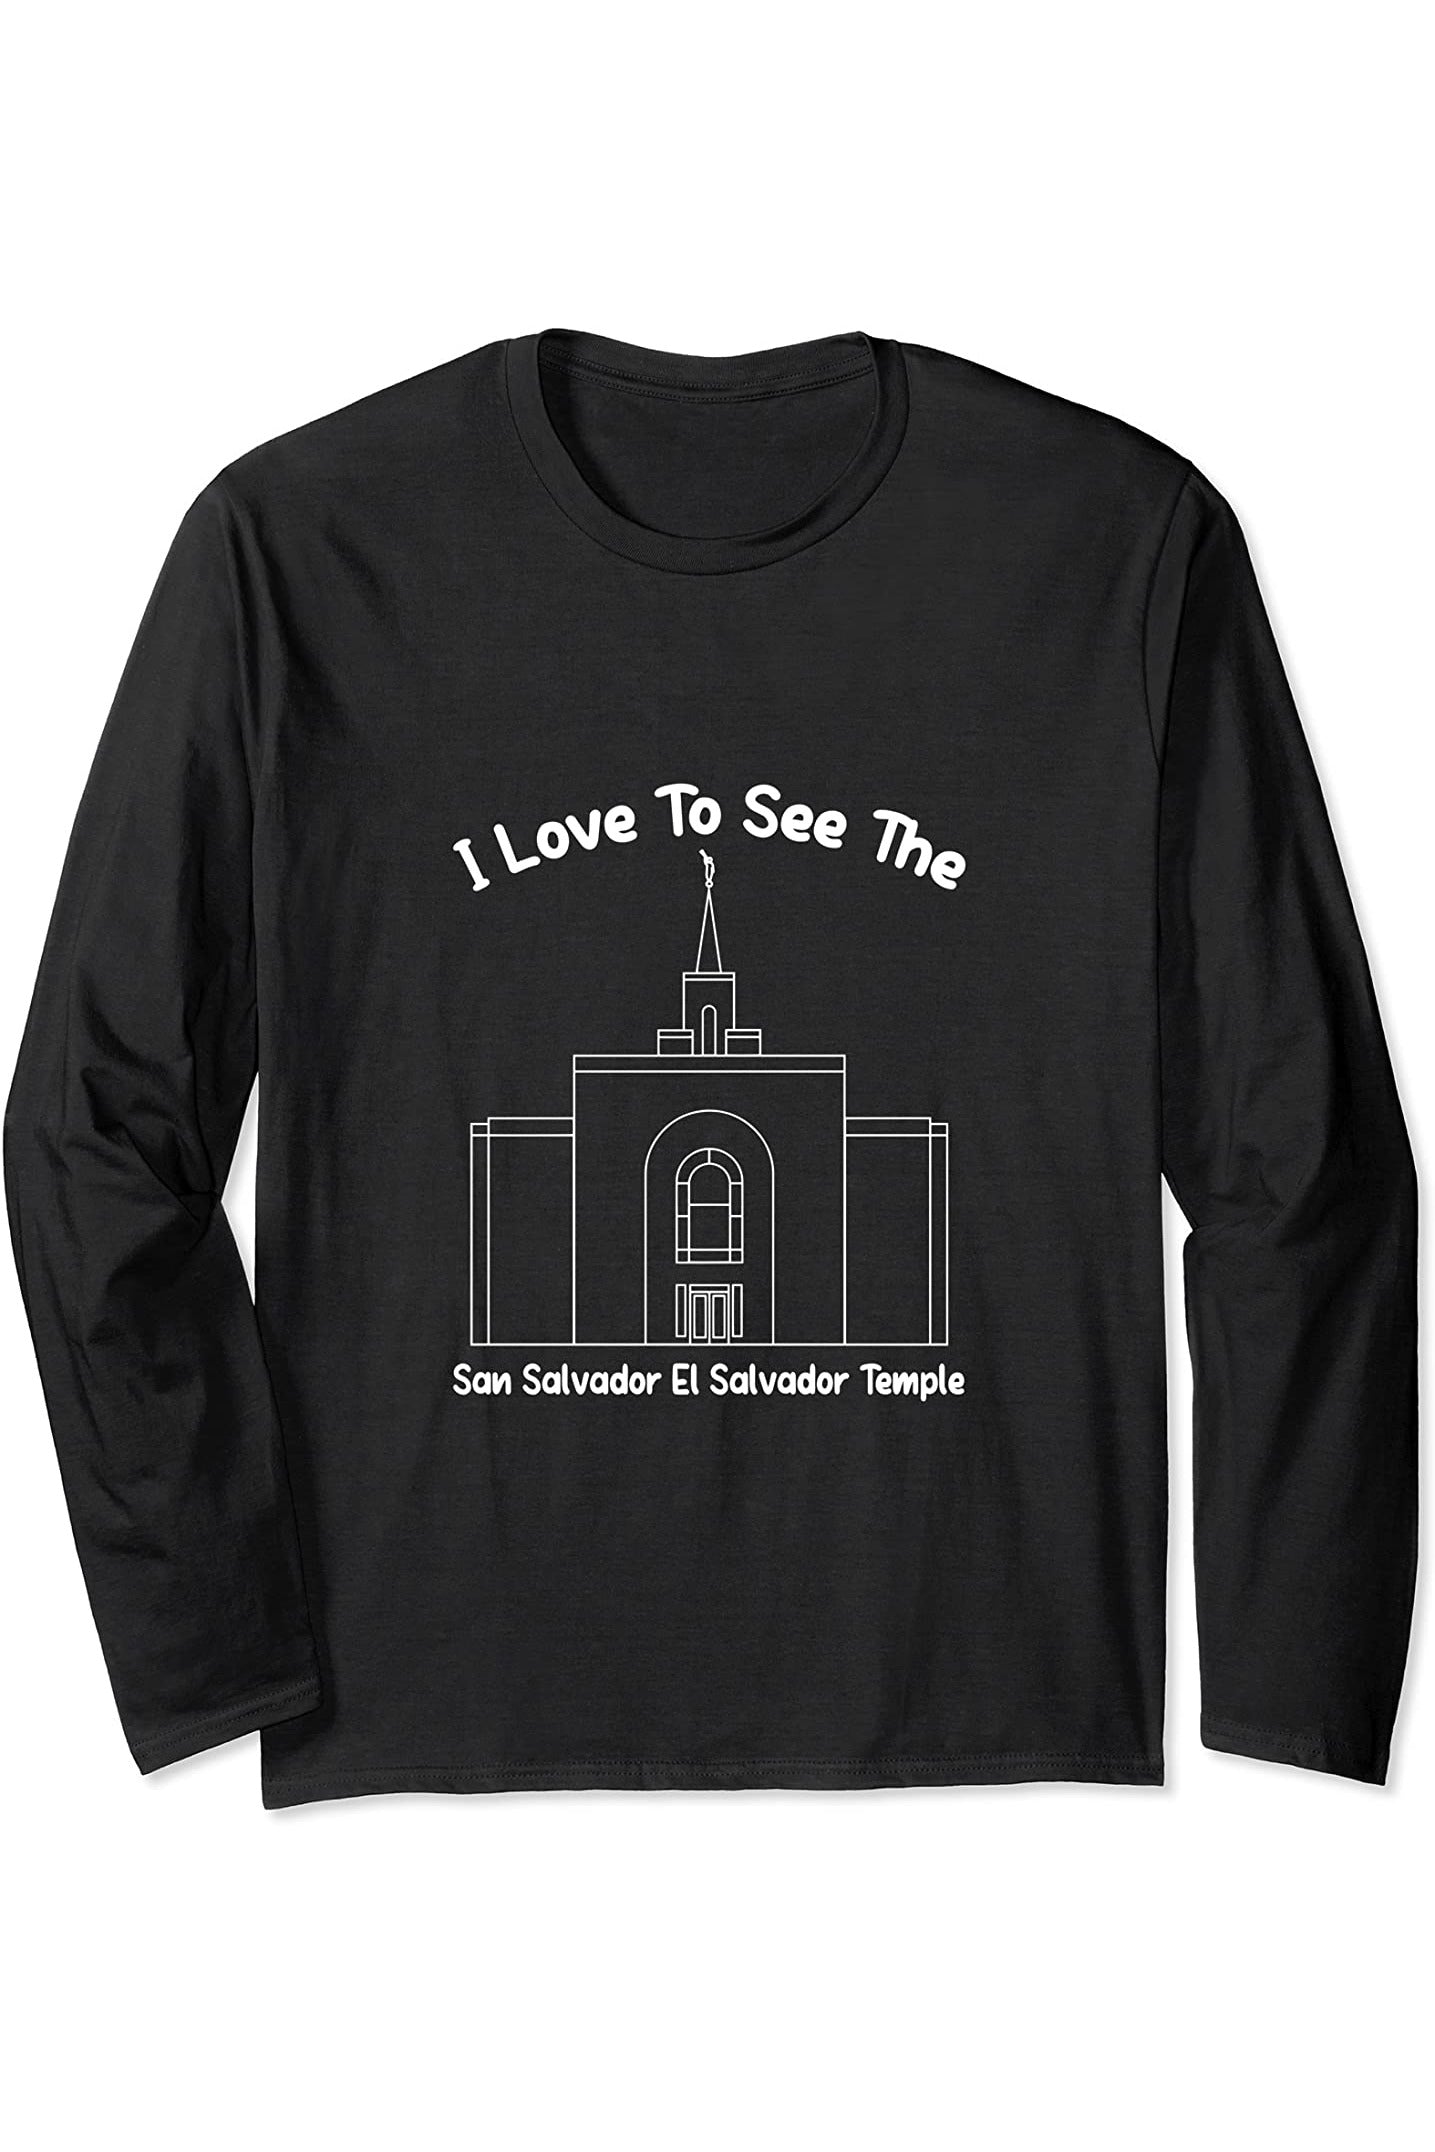 San Salvador El Salvador Temple Long Sleeve T-Shirt - Primary Style (English) US